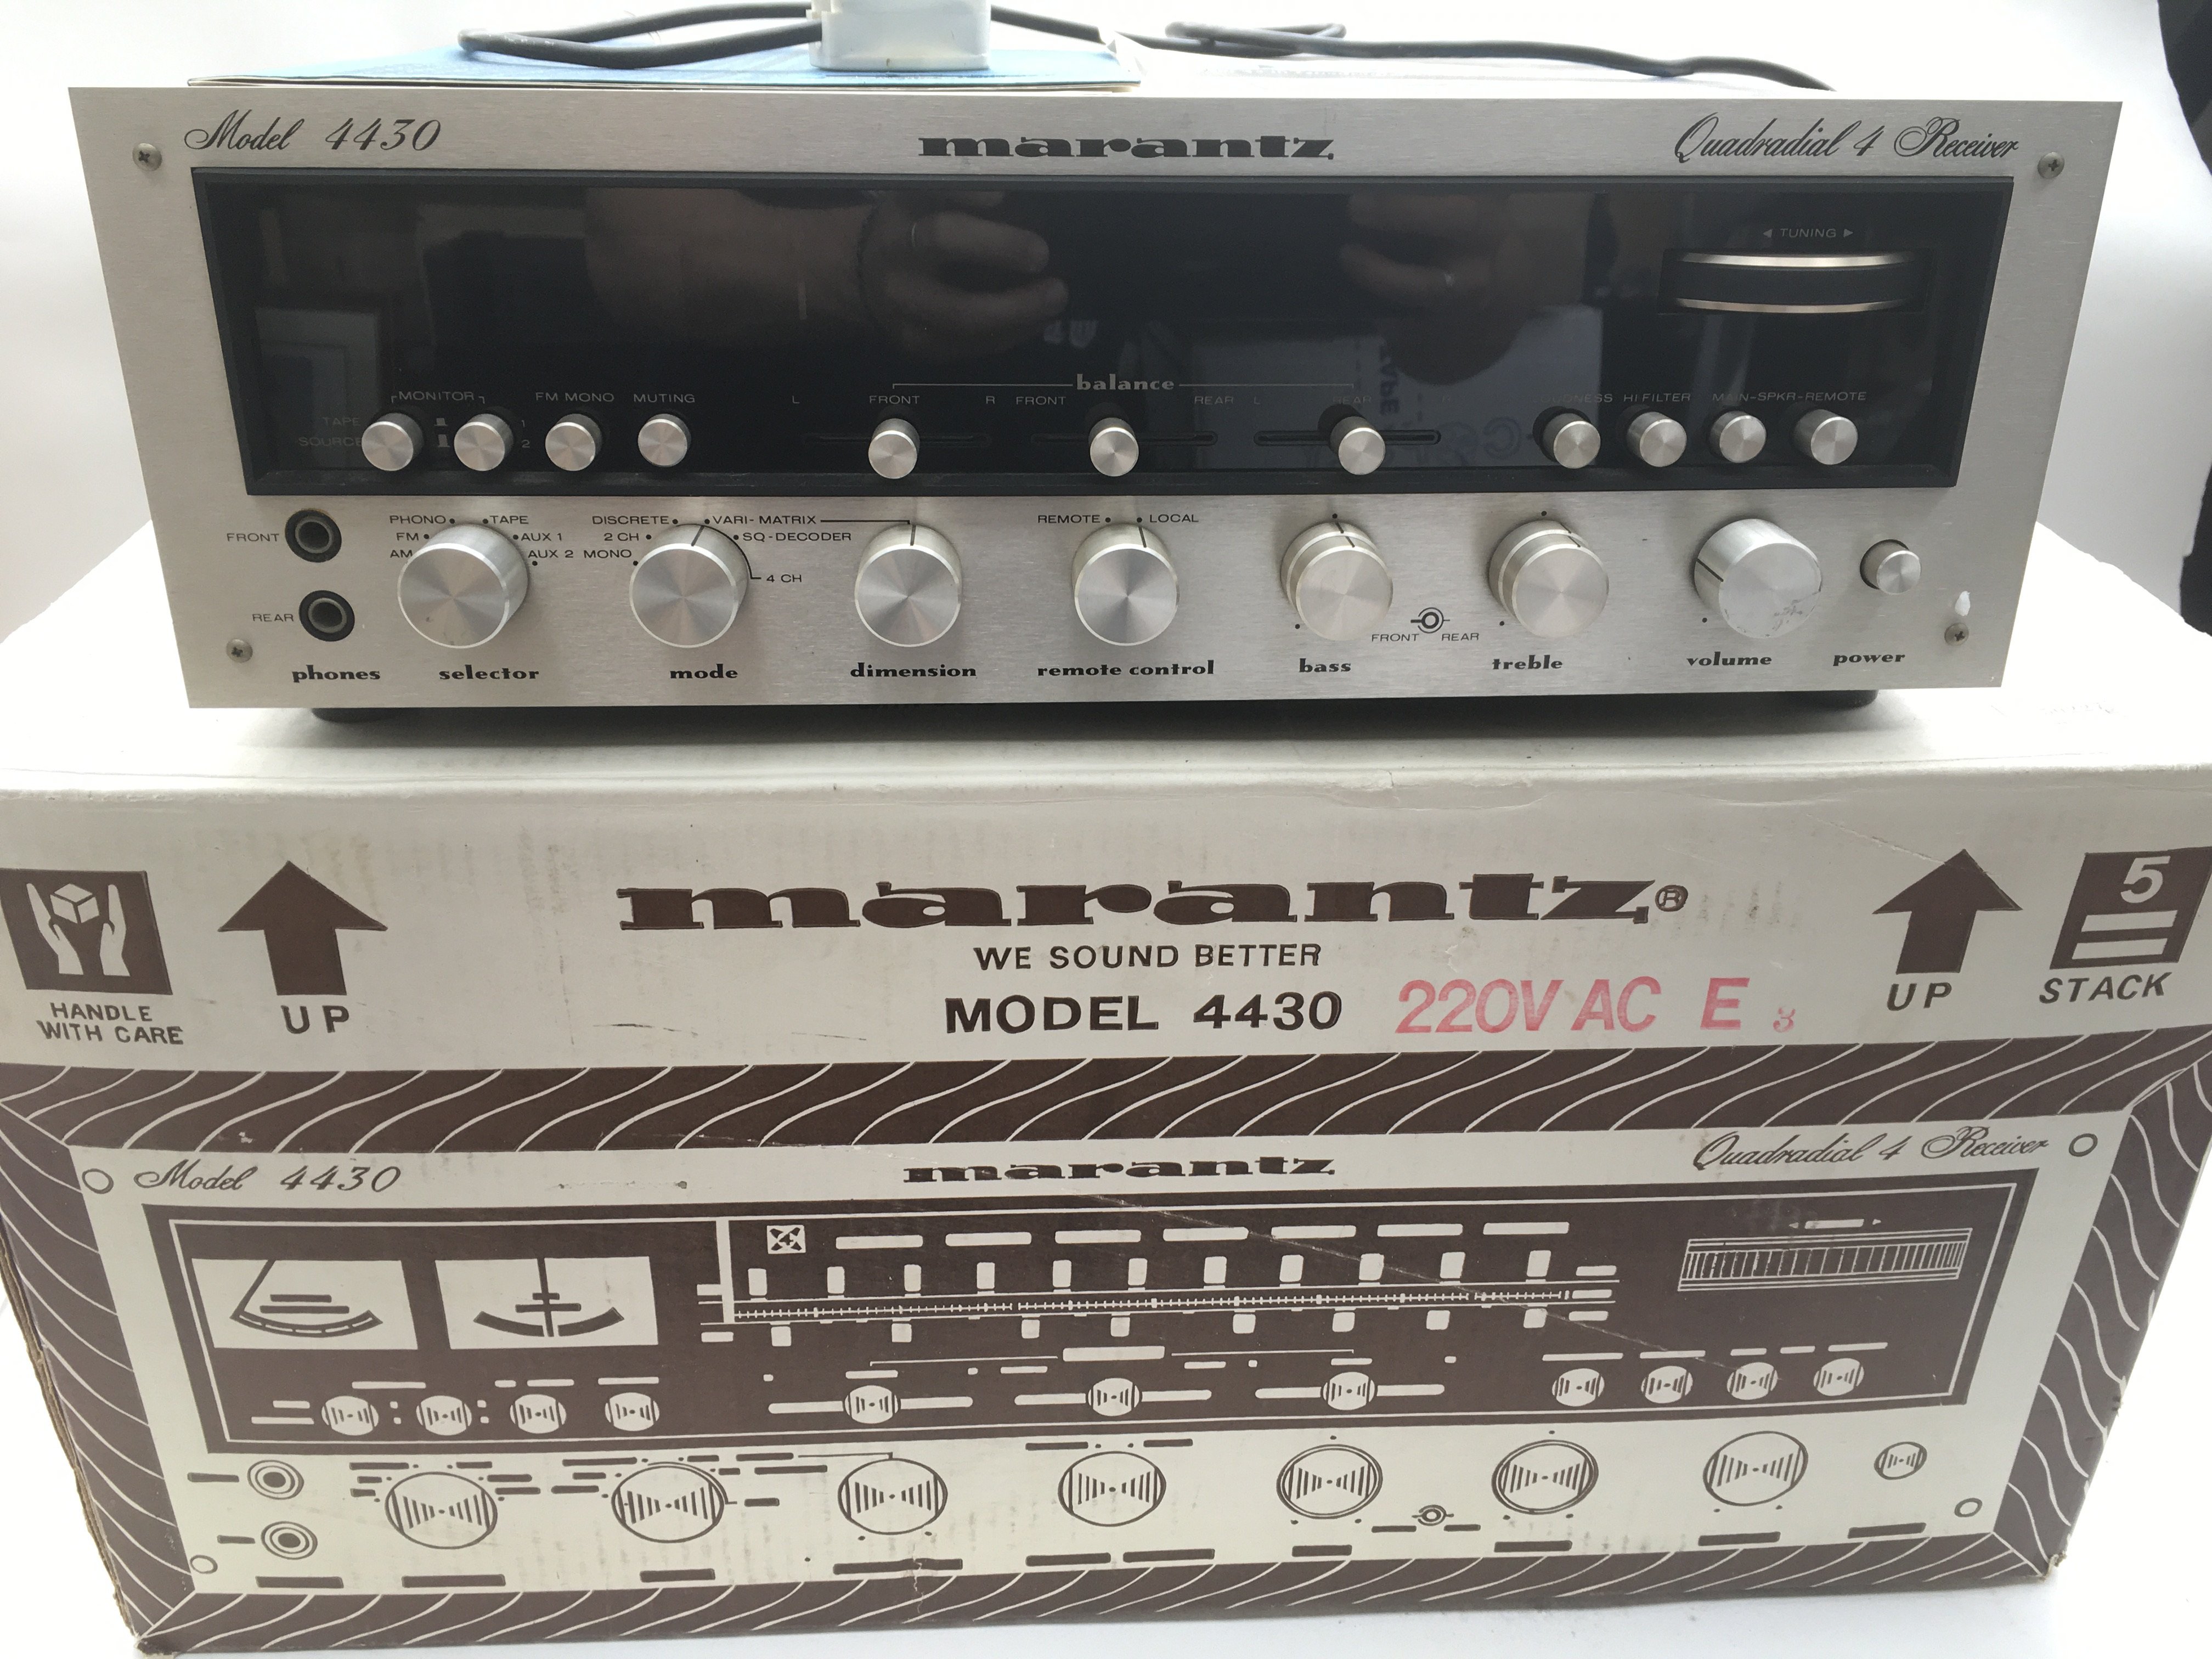 A boxed Marantz 4430 Quadradial stereo receiver wi